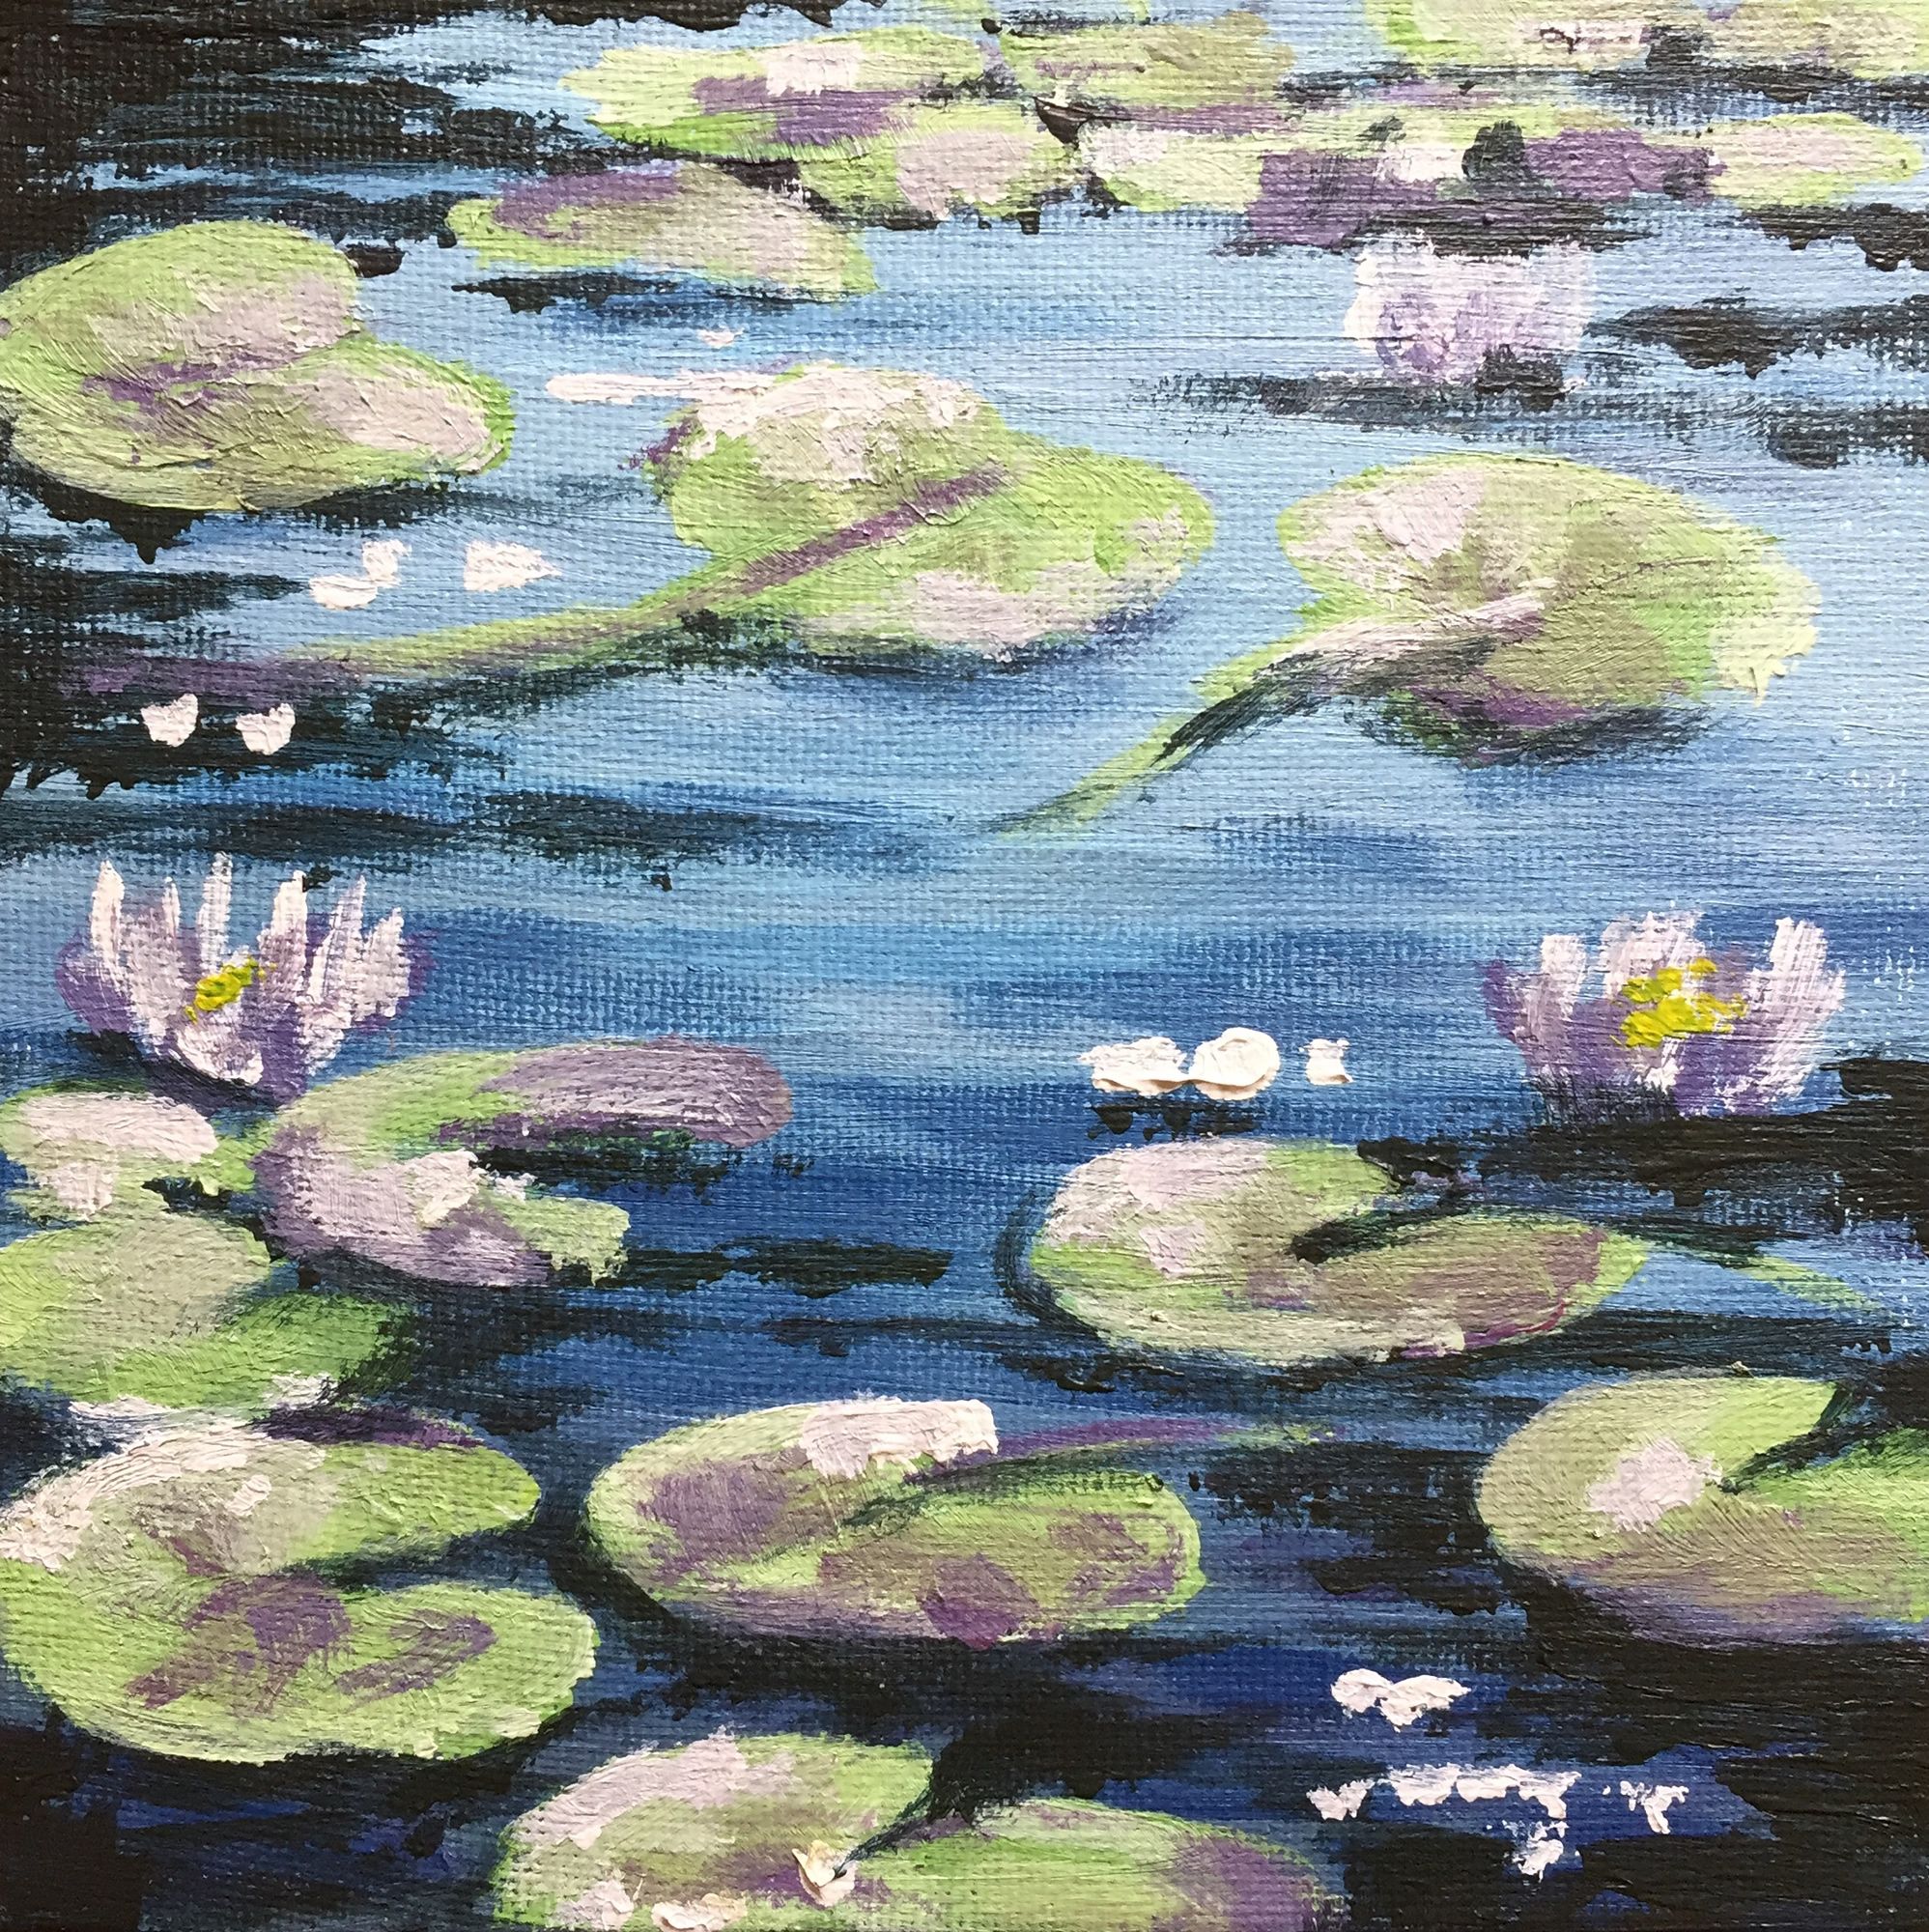 Lily Pond Study 1 by Alexandra Buckle